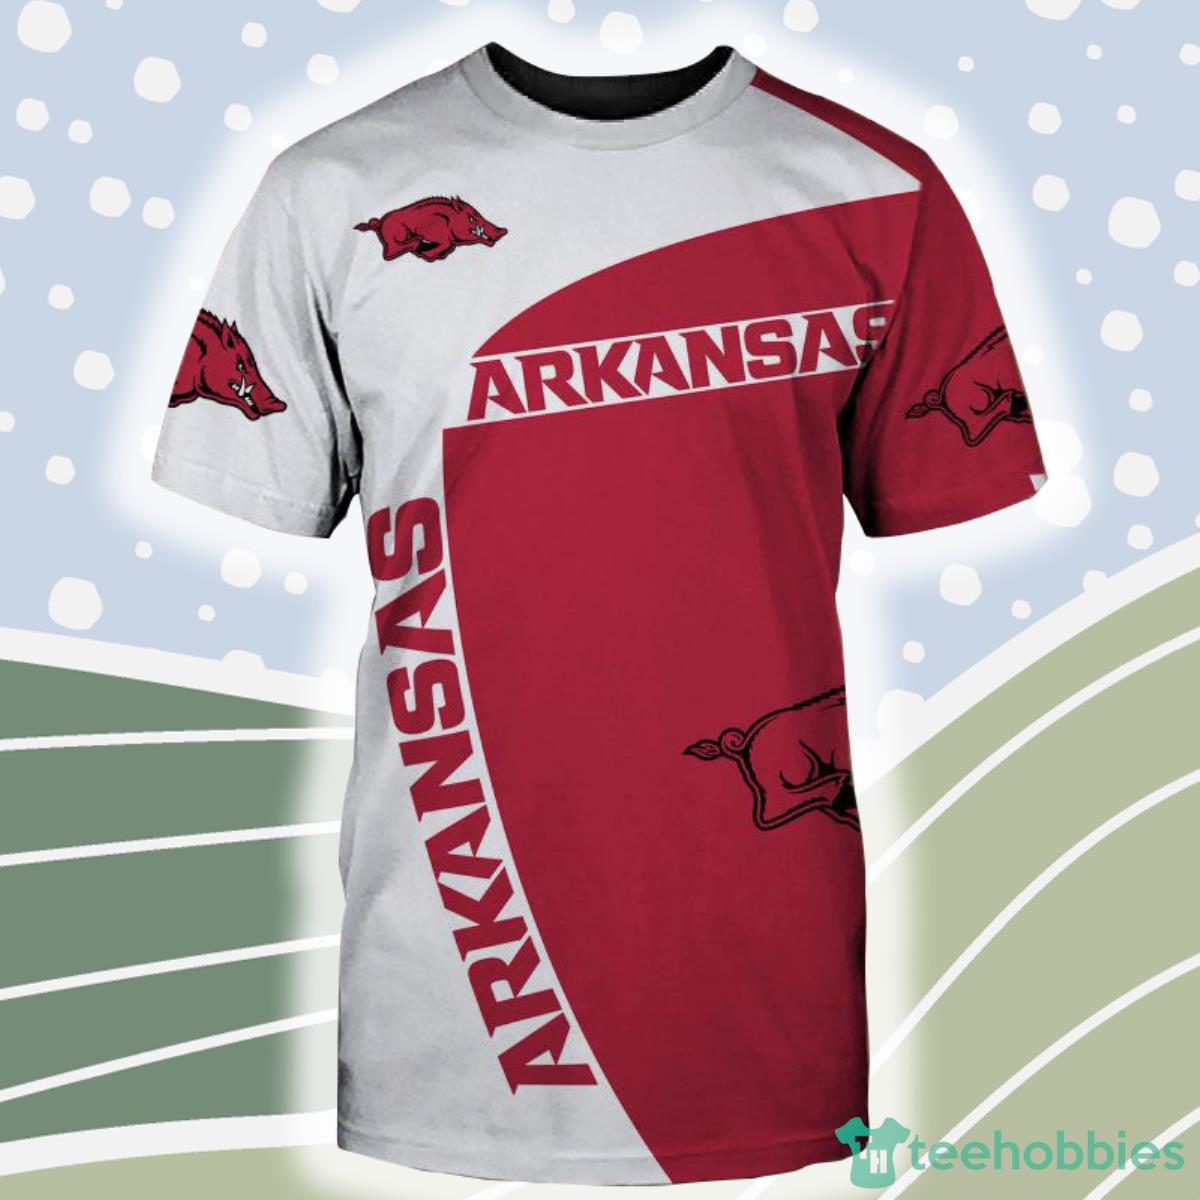 Arkansas Razorbacks NCAA Shirt 3D For Fans Product Photo 1